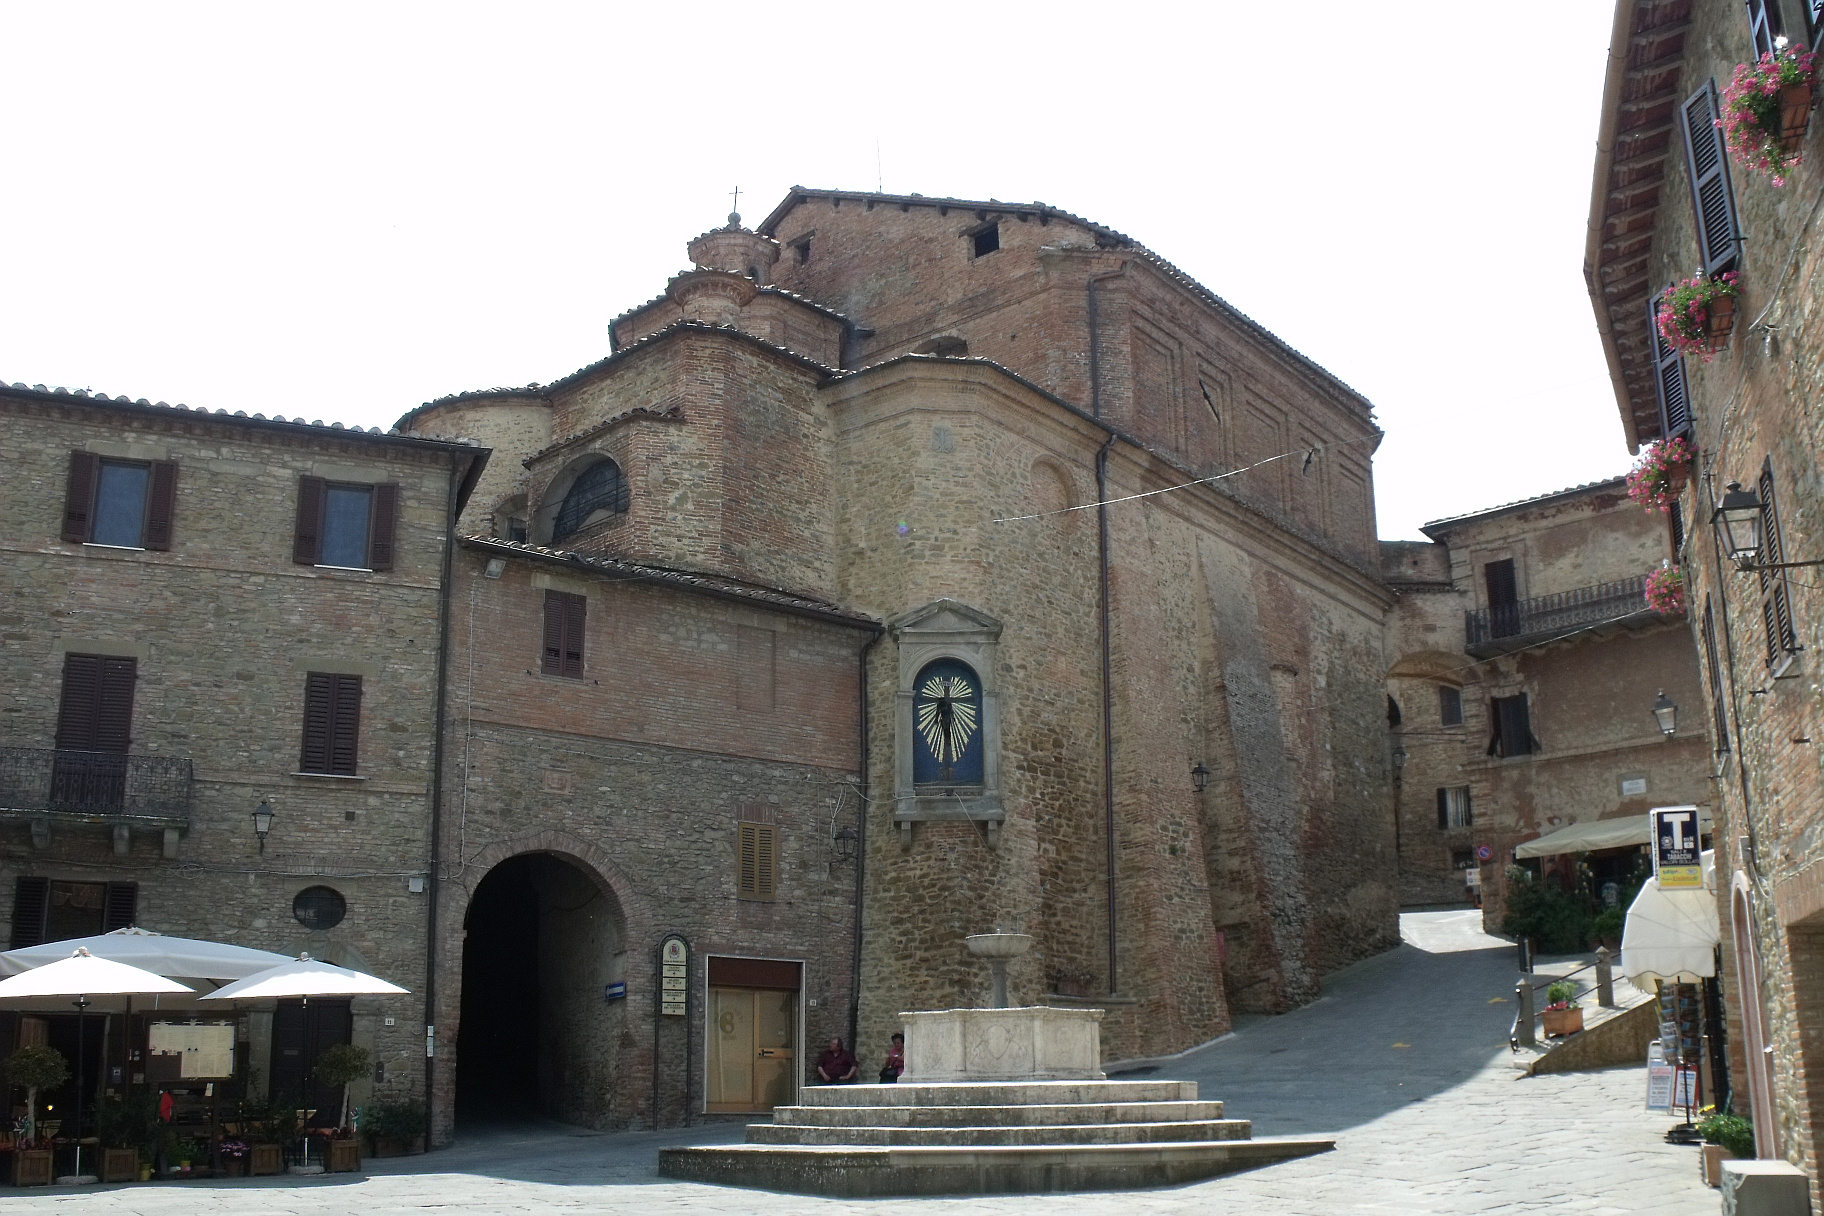 La Chiesa di San Michele arcangelo a Panicale, foto di LigaDue su wikipedia.org